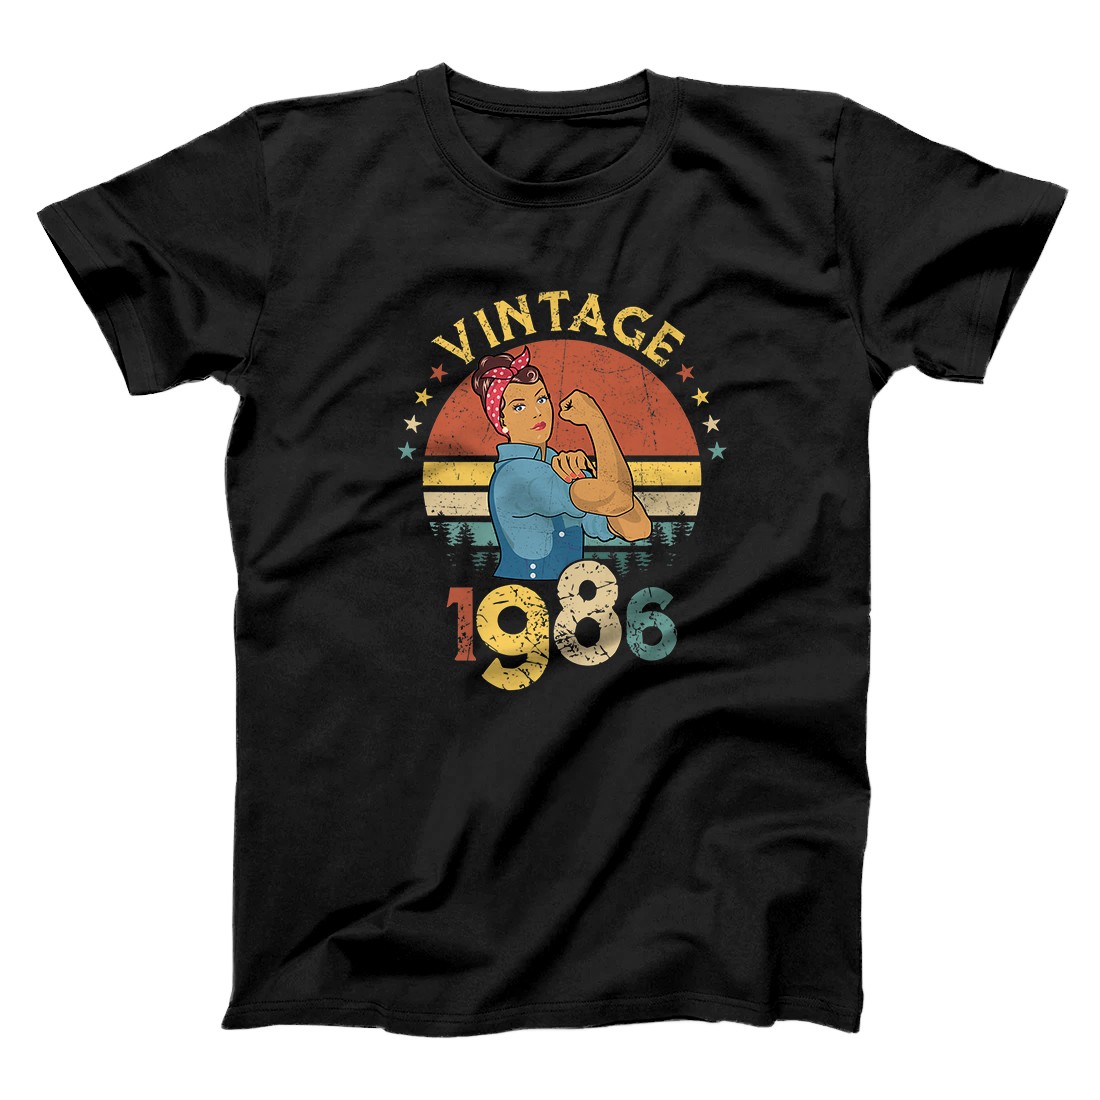 Personalized 1986 Birthday Shirt Classic Retro Style Vintage Shirt Premium T-Shirt